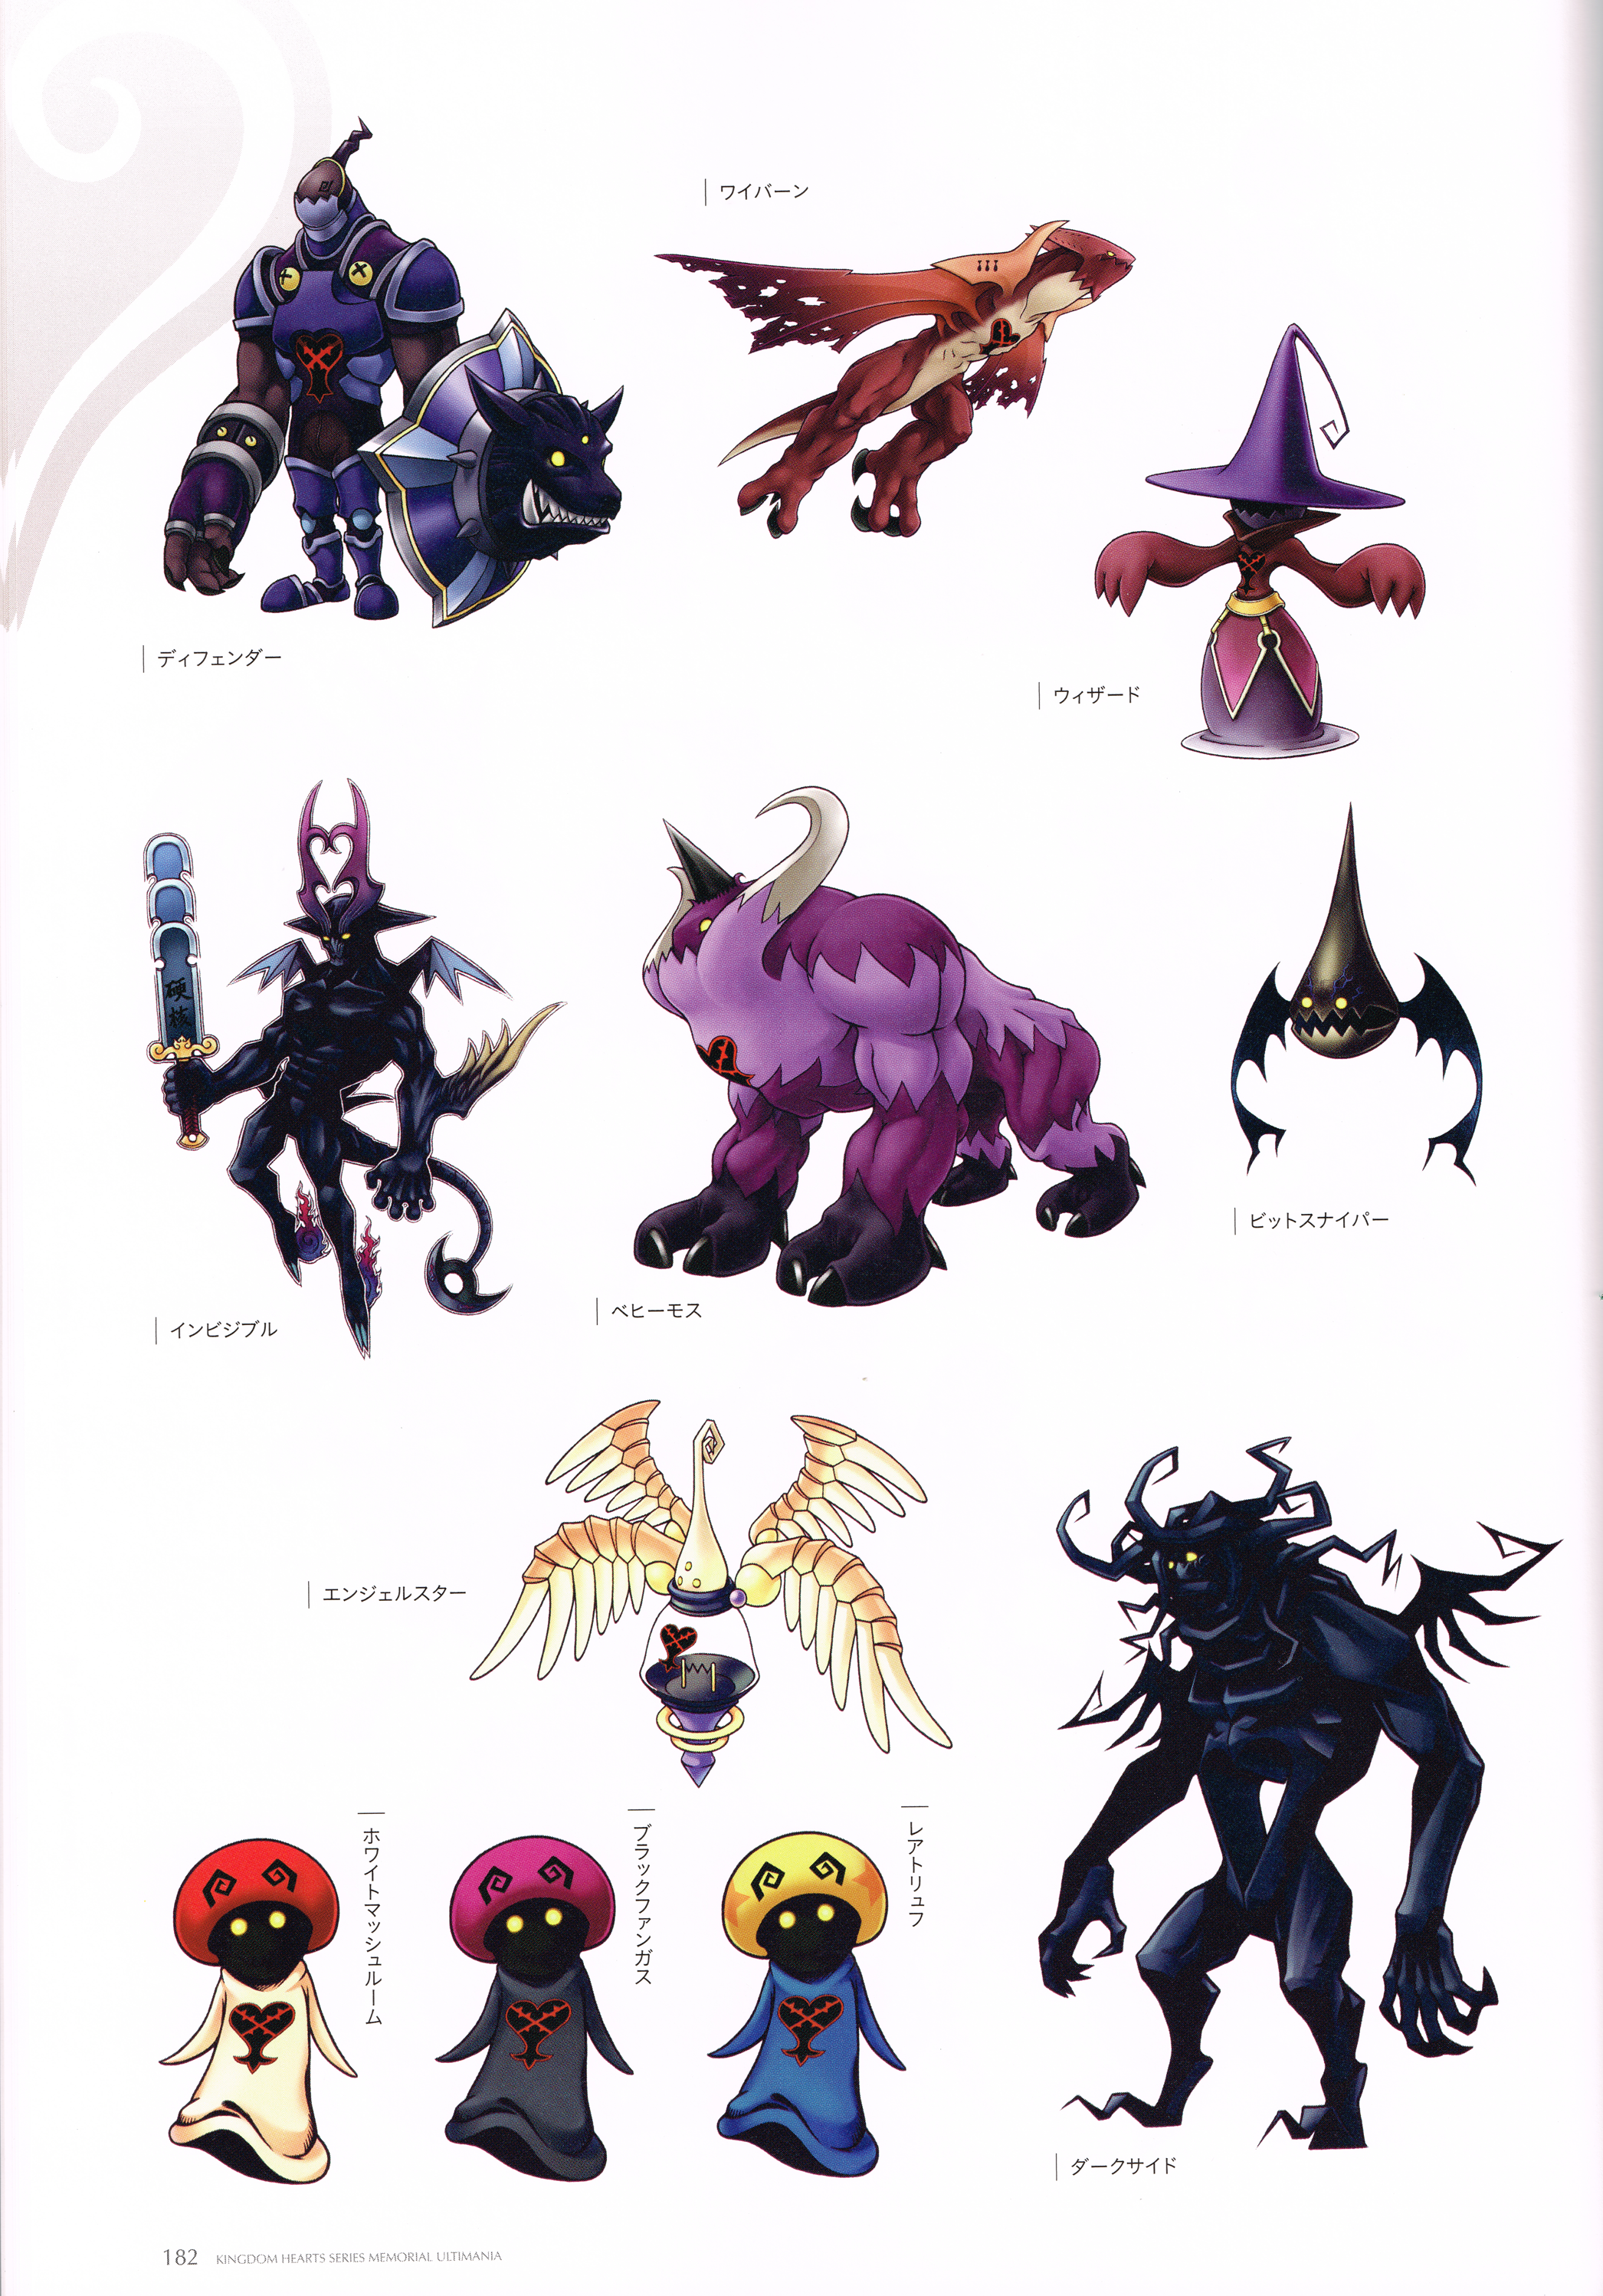 Kingdom Hearts: Birth By Sleep - Characters - Kingdom Hearts Ultimania